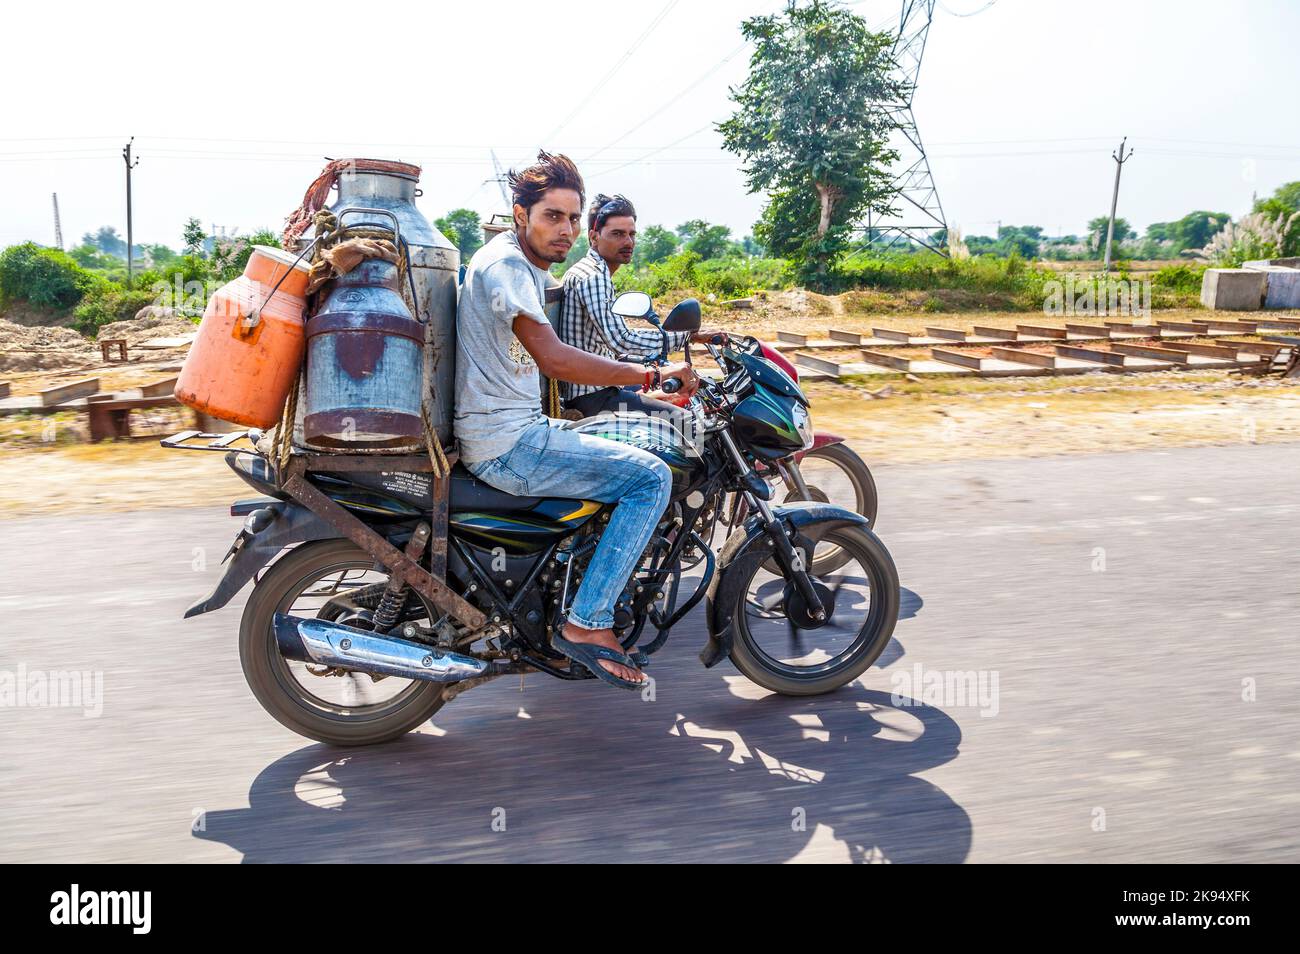 RAJASTHAN, INDIA - OCTOBER 18: men riding motorbike with cans of milk on October 18, 2012 in Rajasthan, India. These motorized milkman reach also the Stock Photo